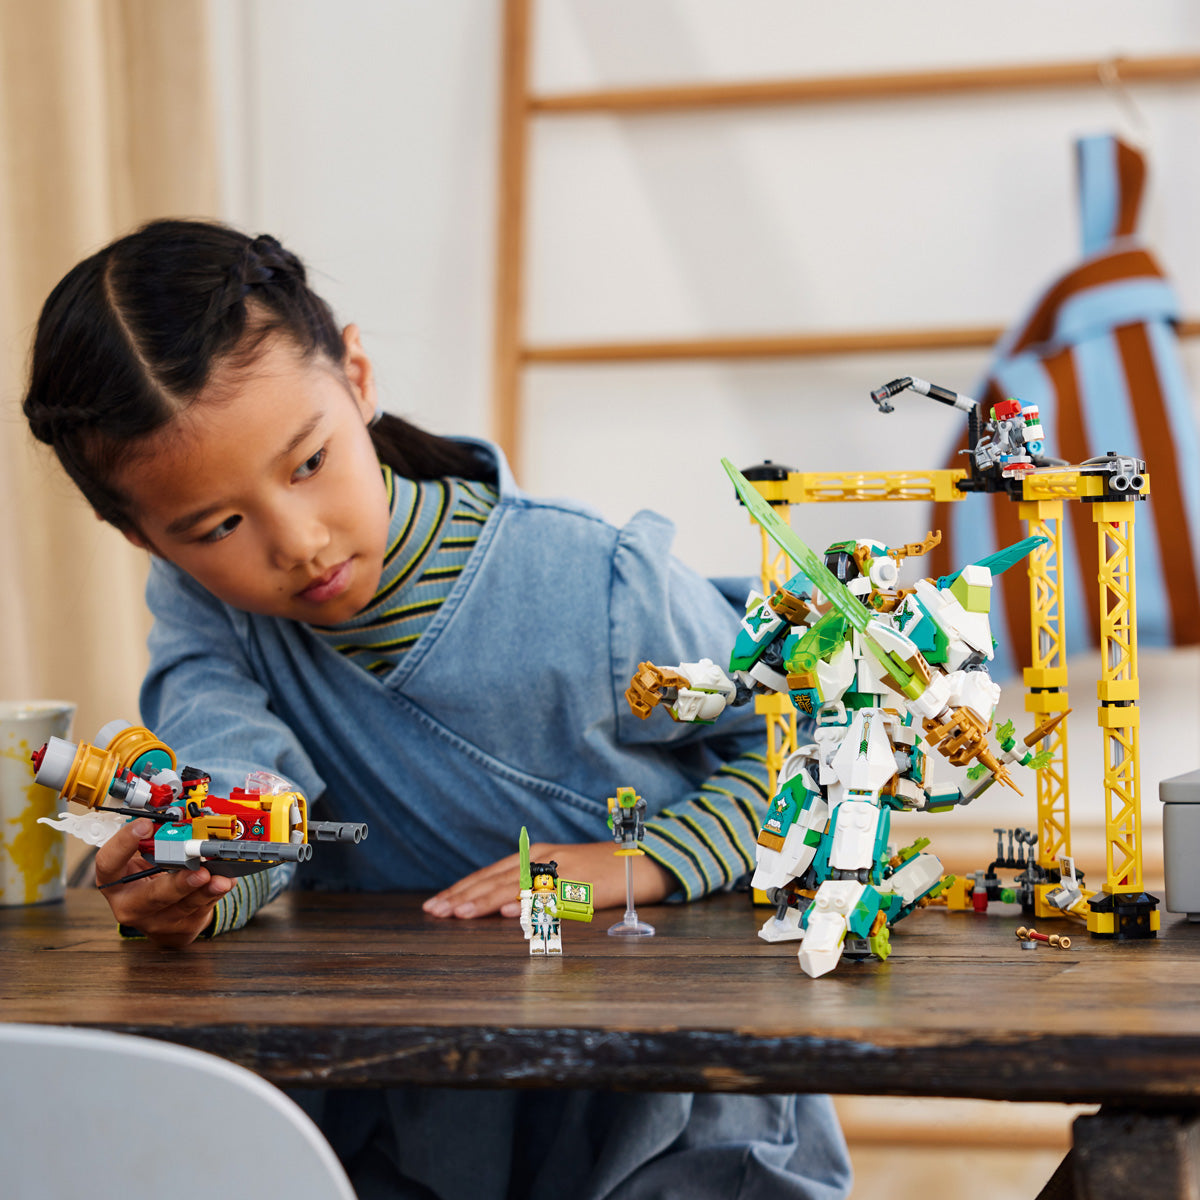 LEGO® Monkie Kid™ - Mein zmajski robot (80053)